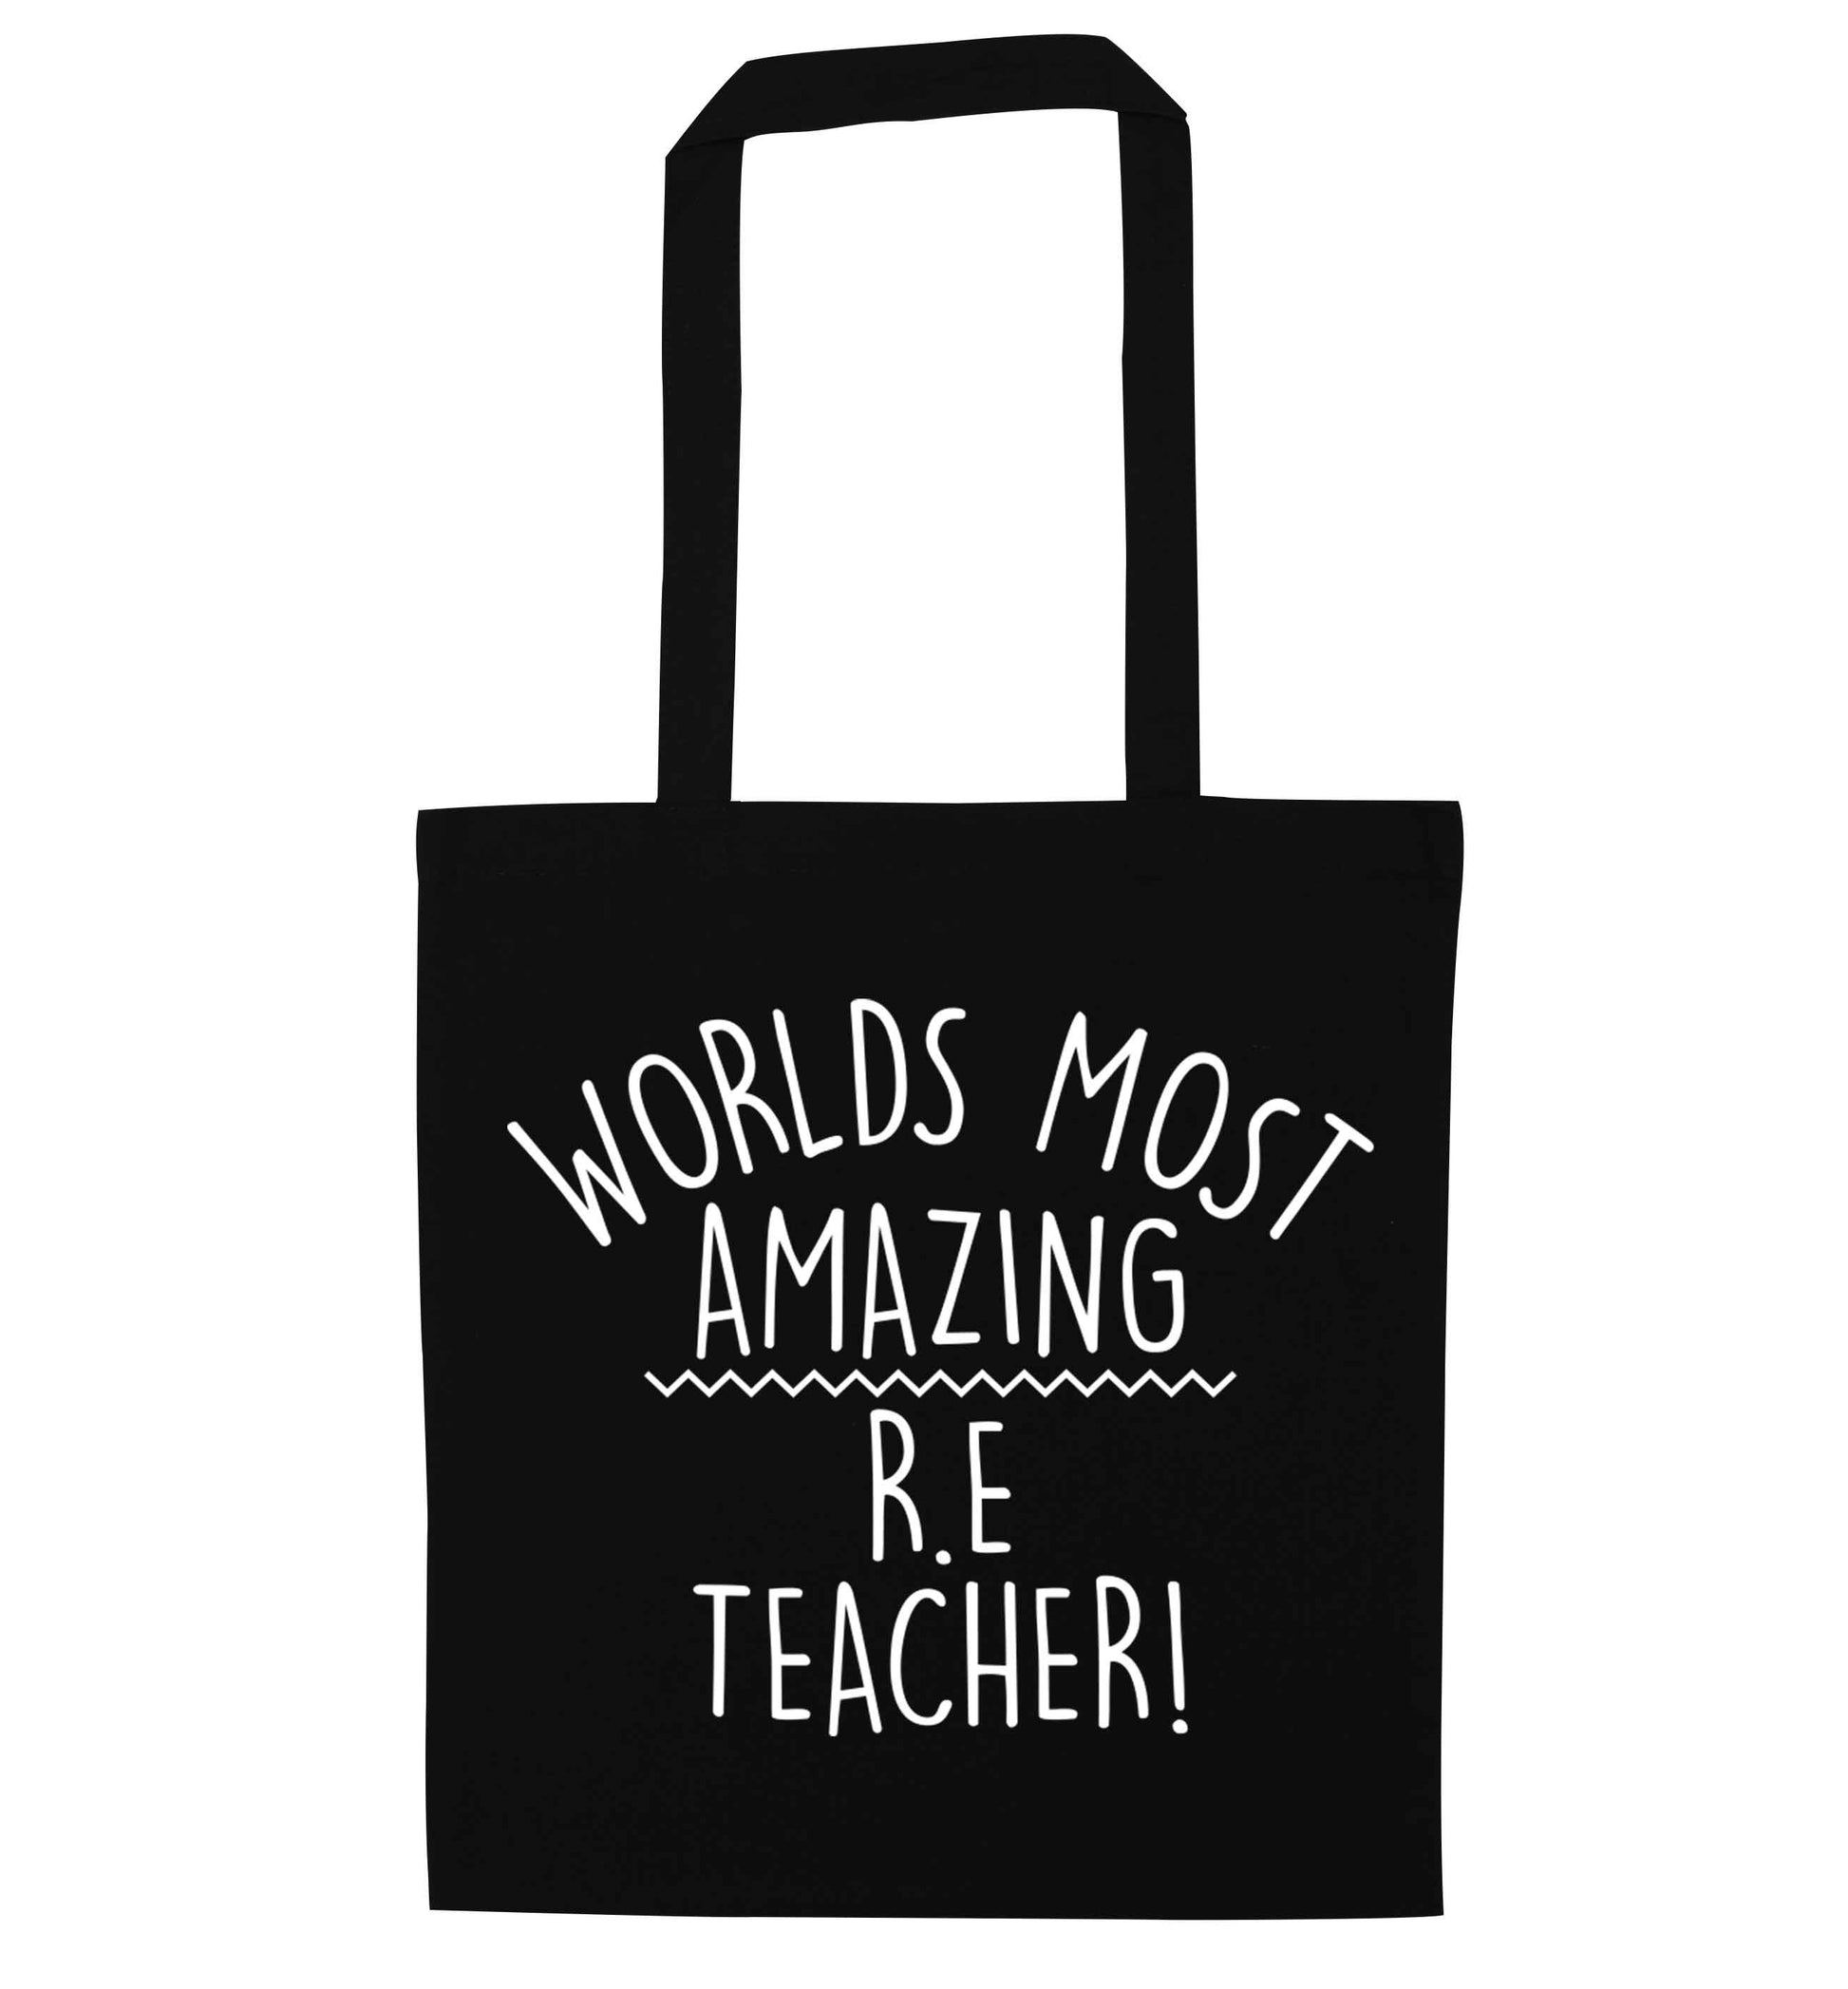 Worlds most amazing R.E teacher black tote bag